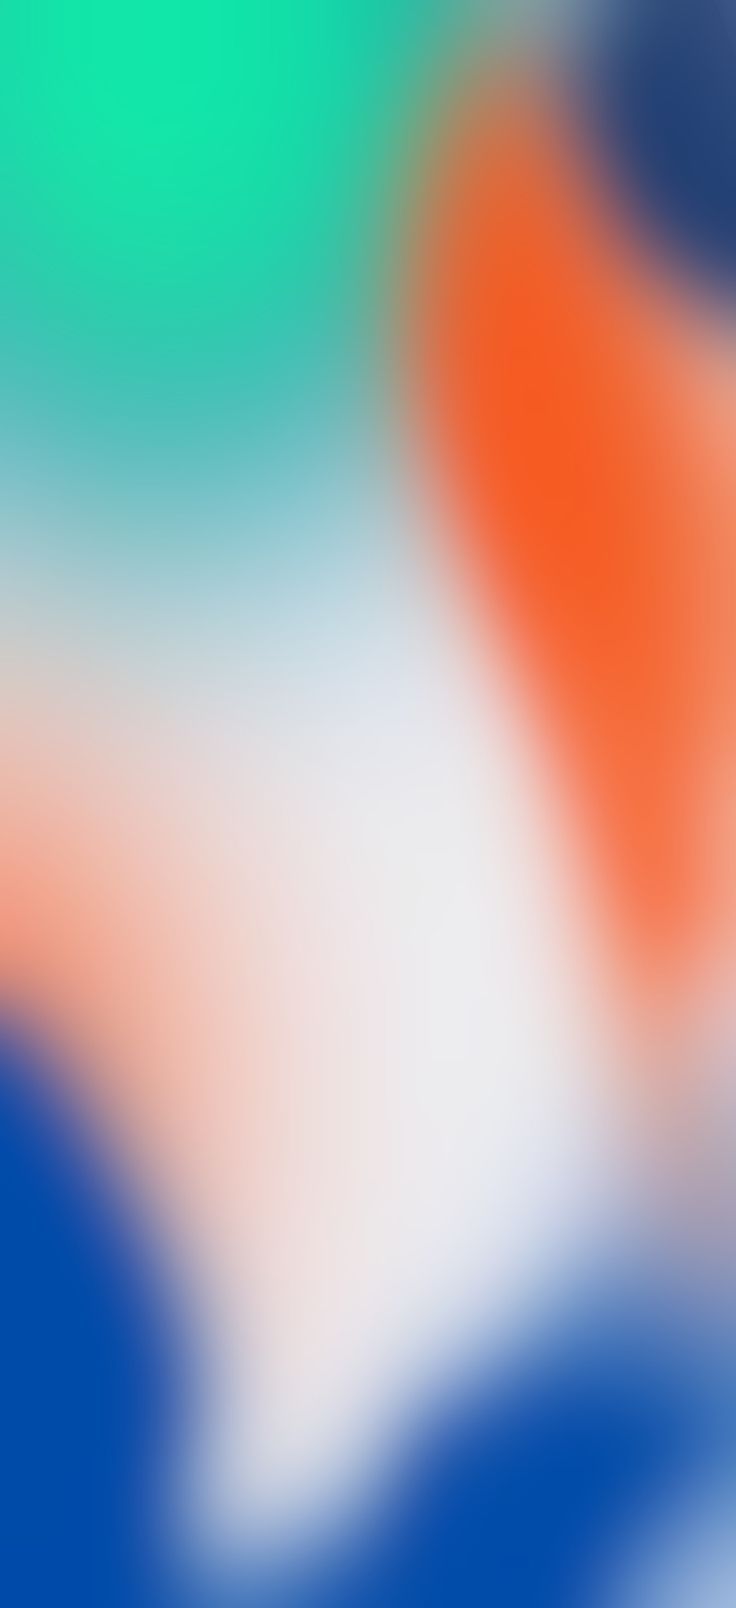 Iphone X Wallpaper 4k (#1421733) - HD Wallpaper & Backgrounds Download